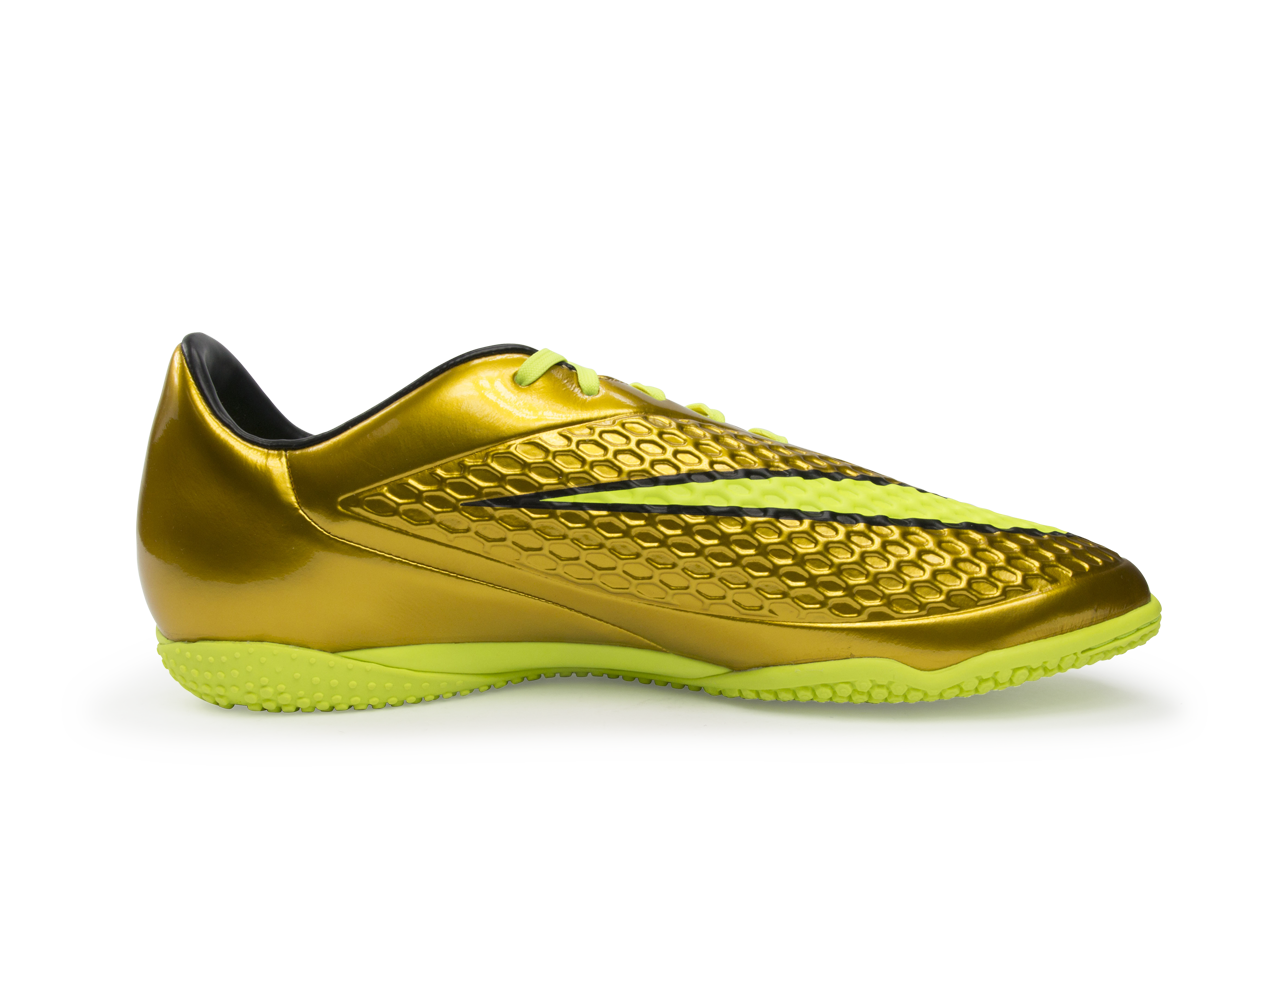 Nike Men's Hypervenom Phelon Indoor Soccer Shoes Metallic Gold/Black/Tour Yellow